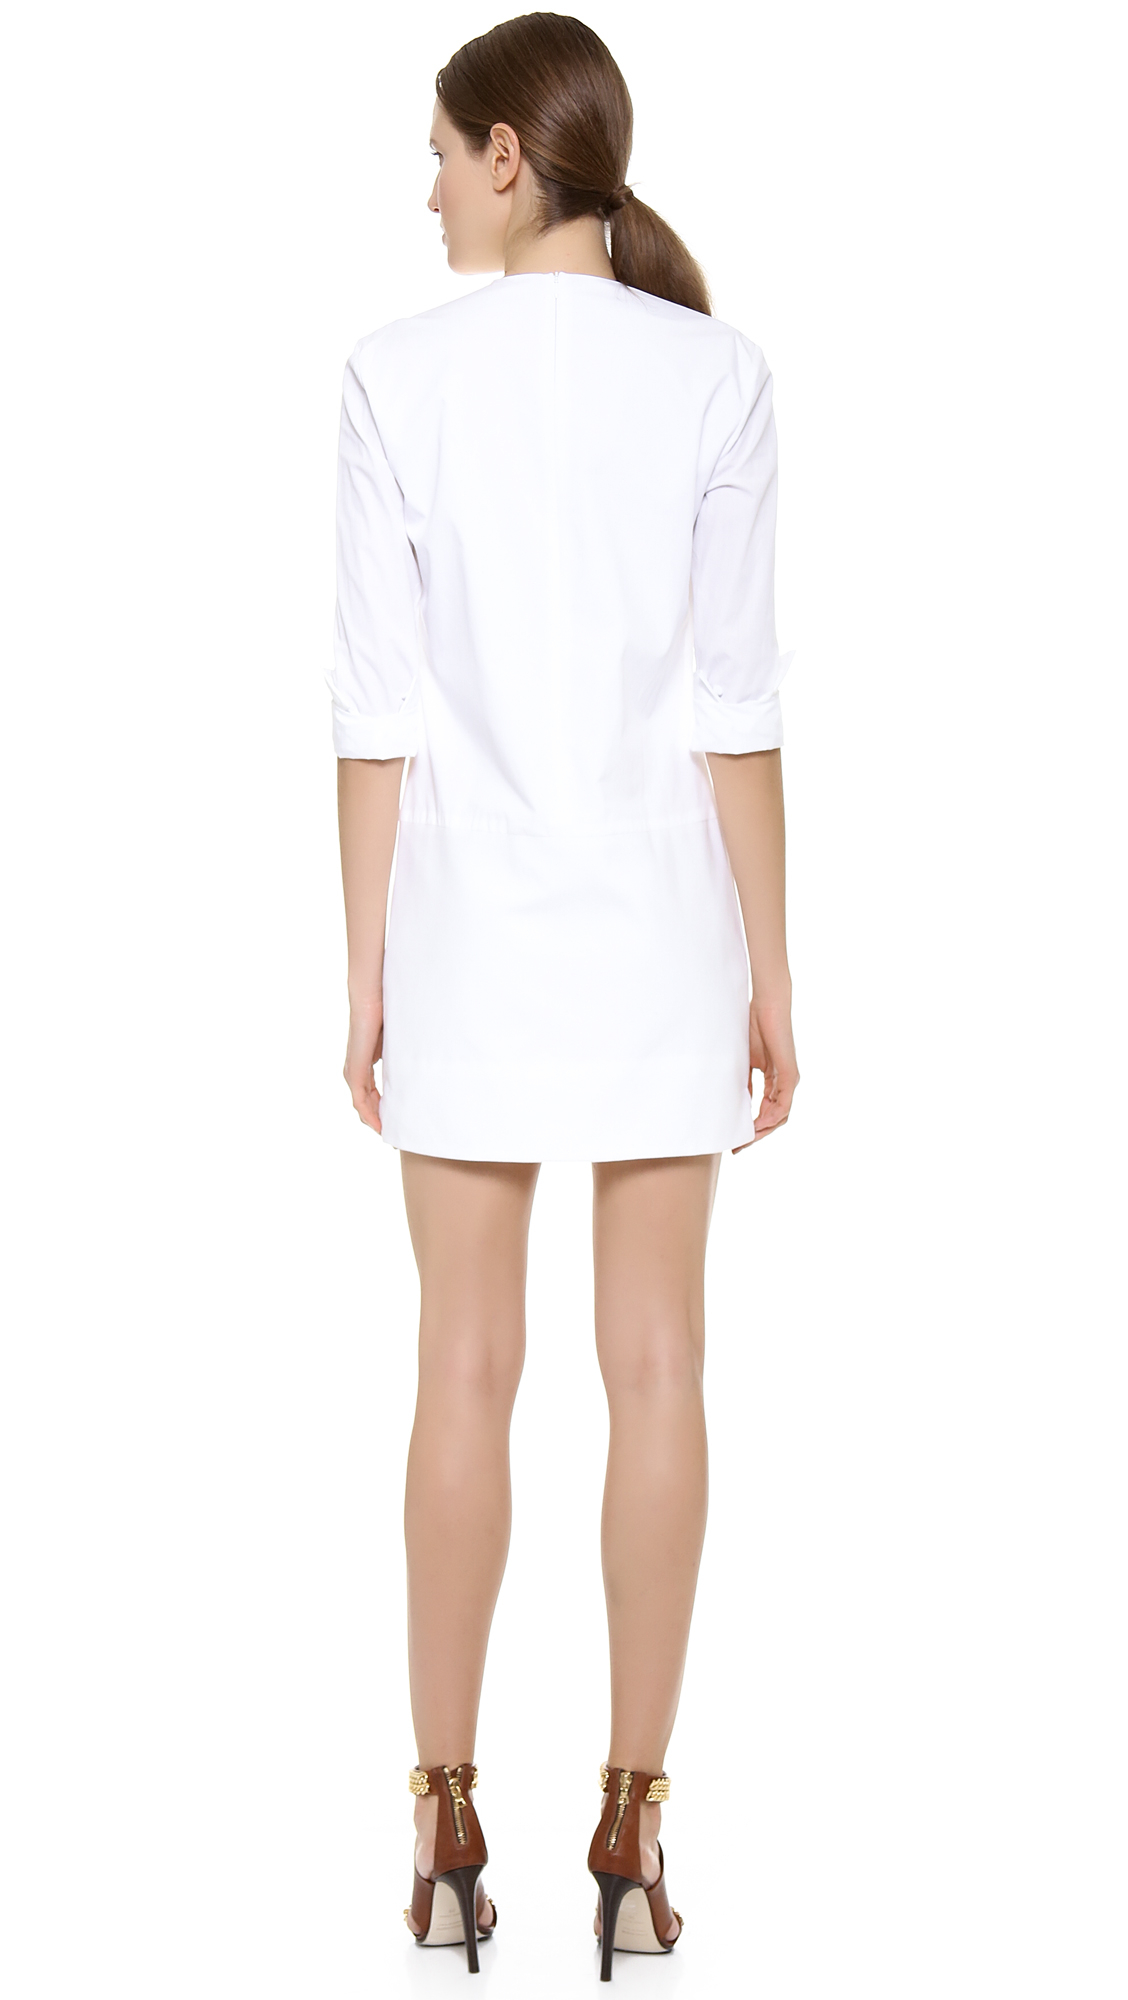 Lyst - Jenni Kayne Drop Waist Dress in White